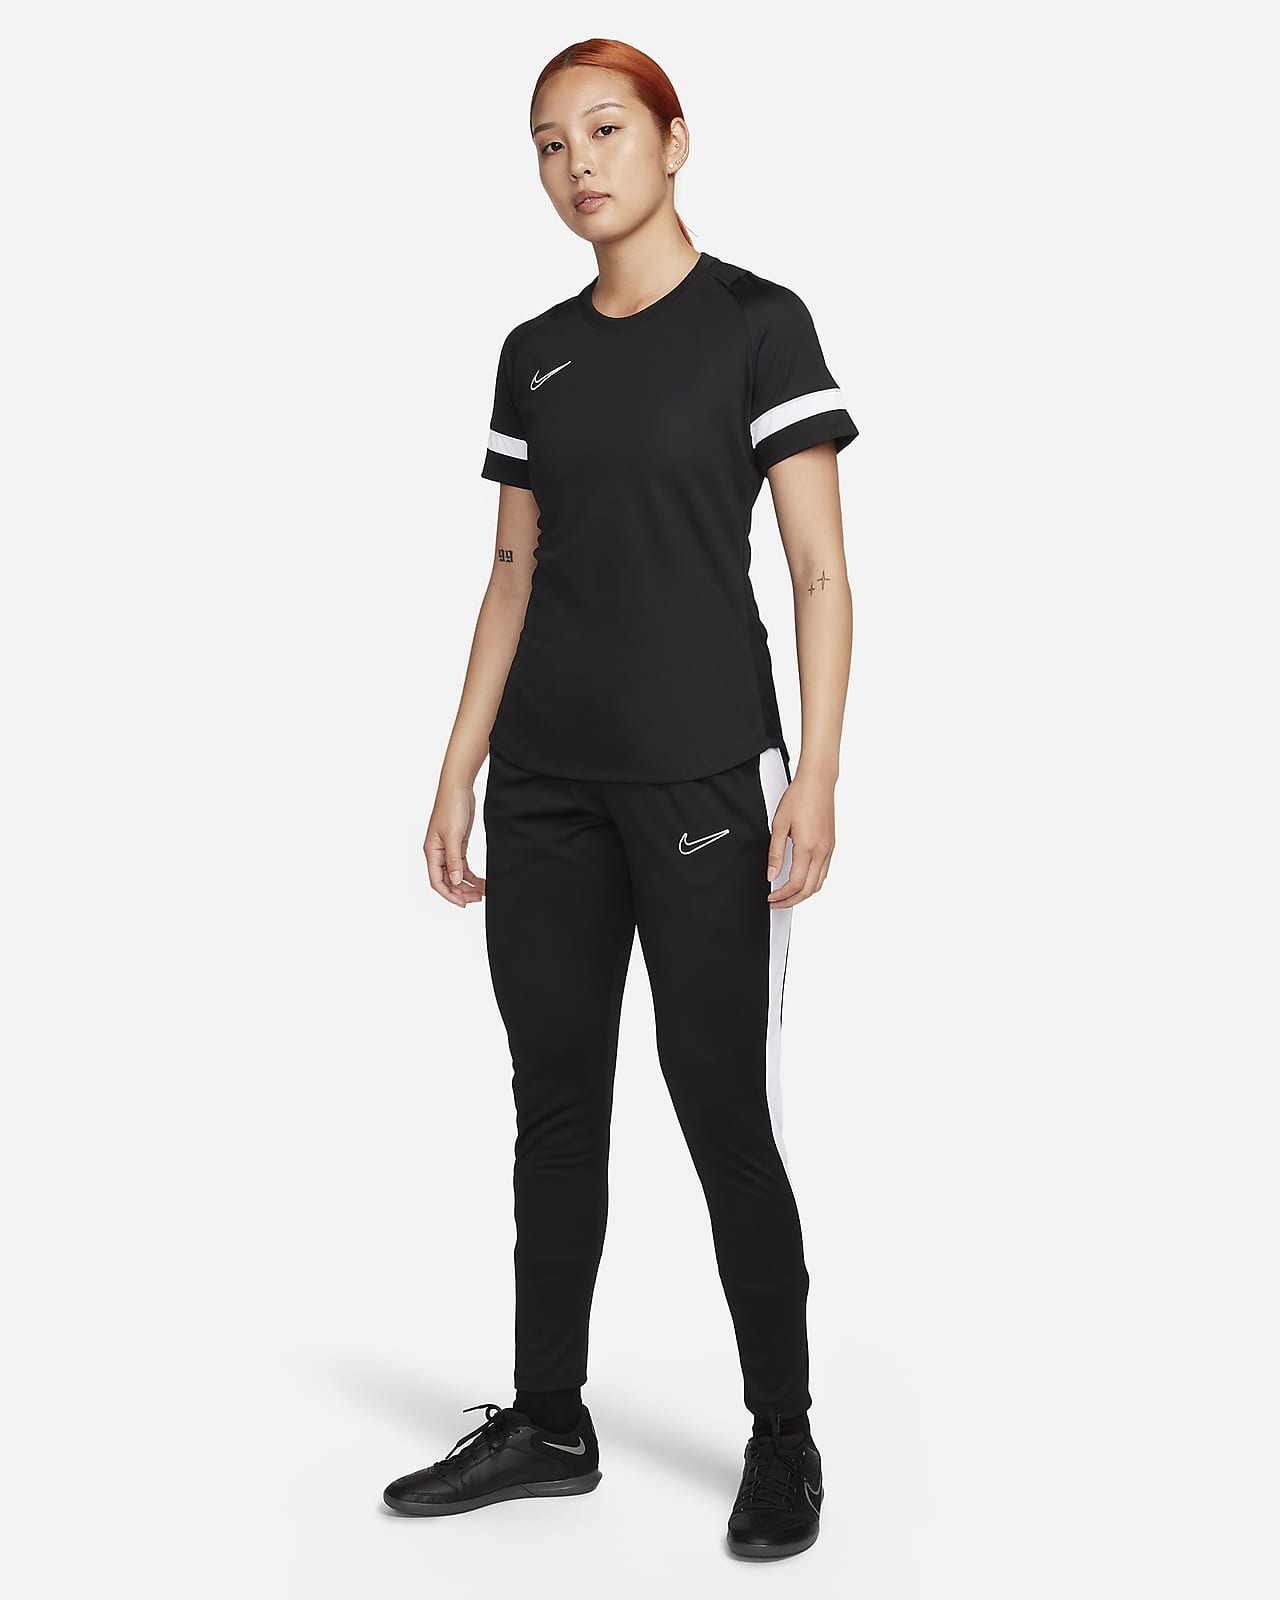 Nike Youth Dri-FIT Academy Soccer Pants - Black